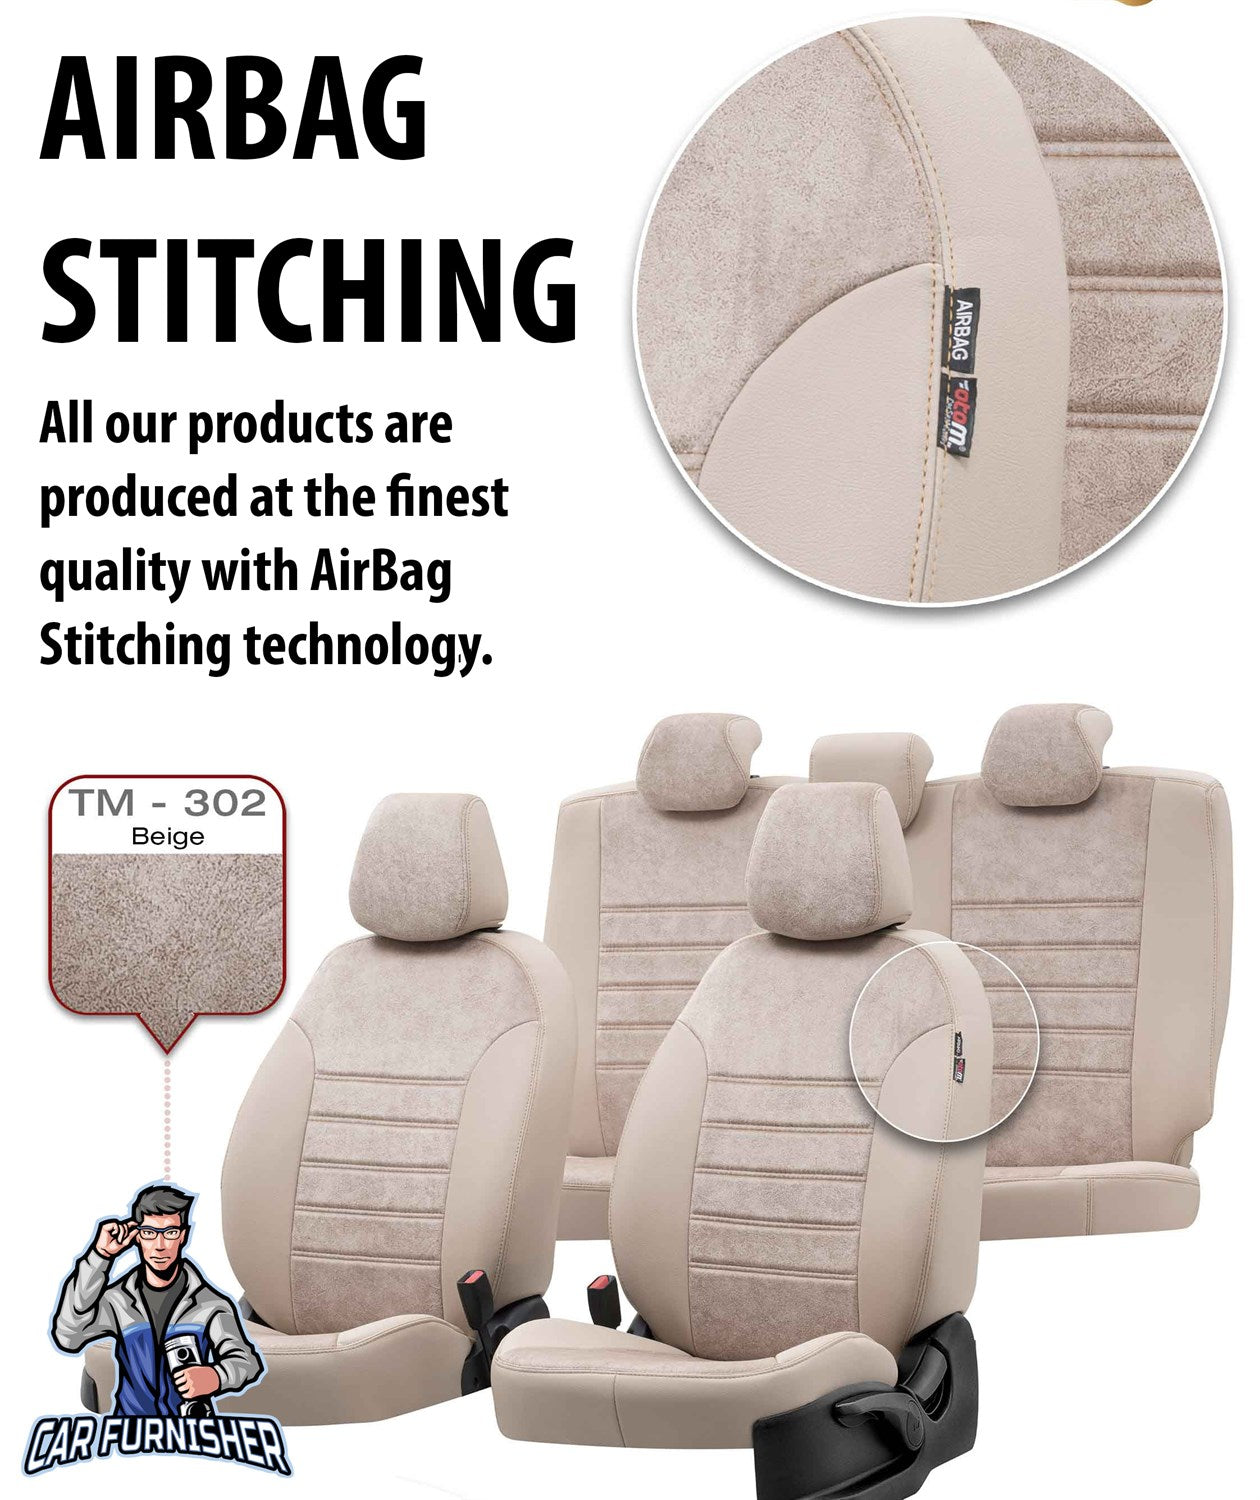 Fiat Stilo Seat Covers Milano Suede Design Burgundy Leather & Suede Fabric